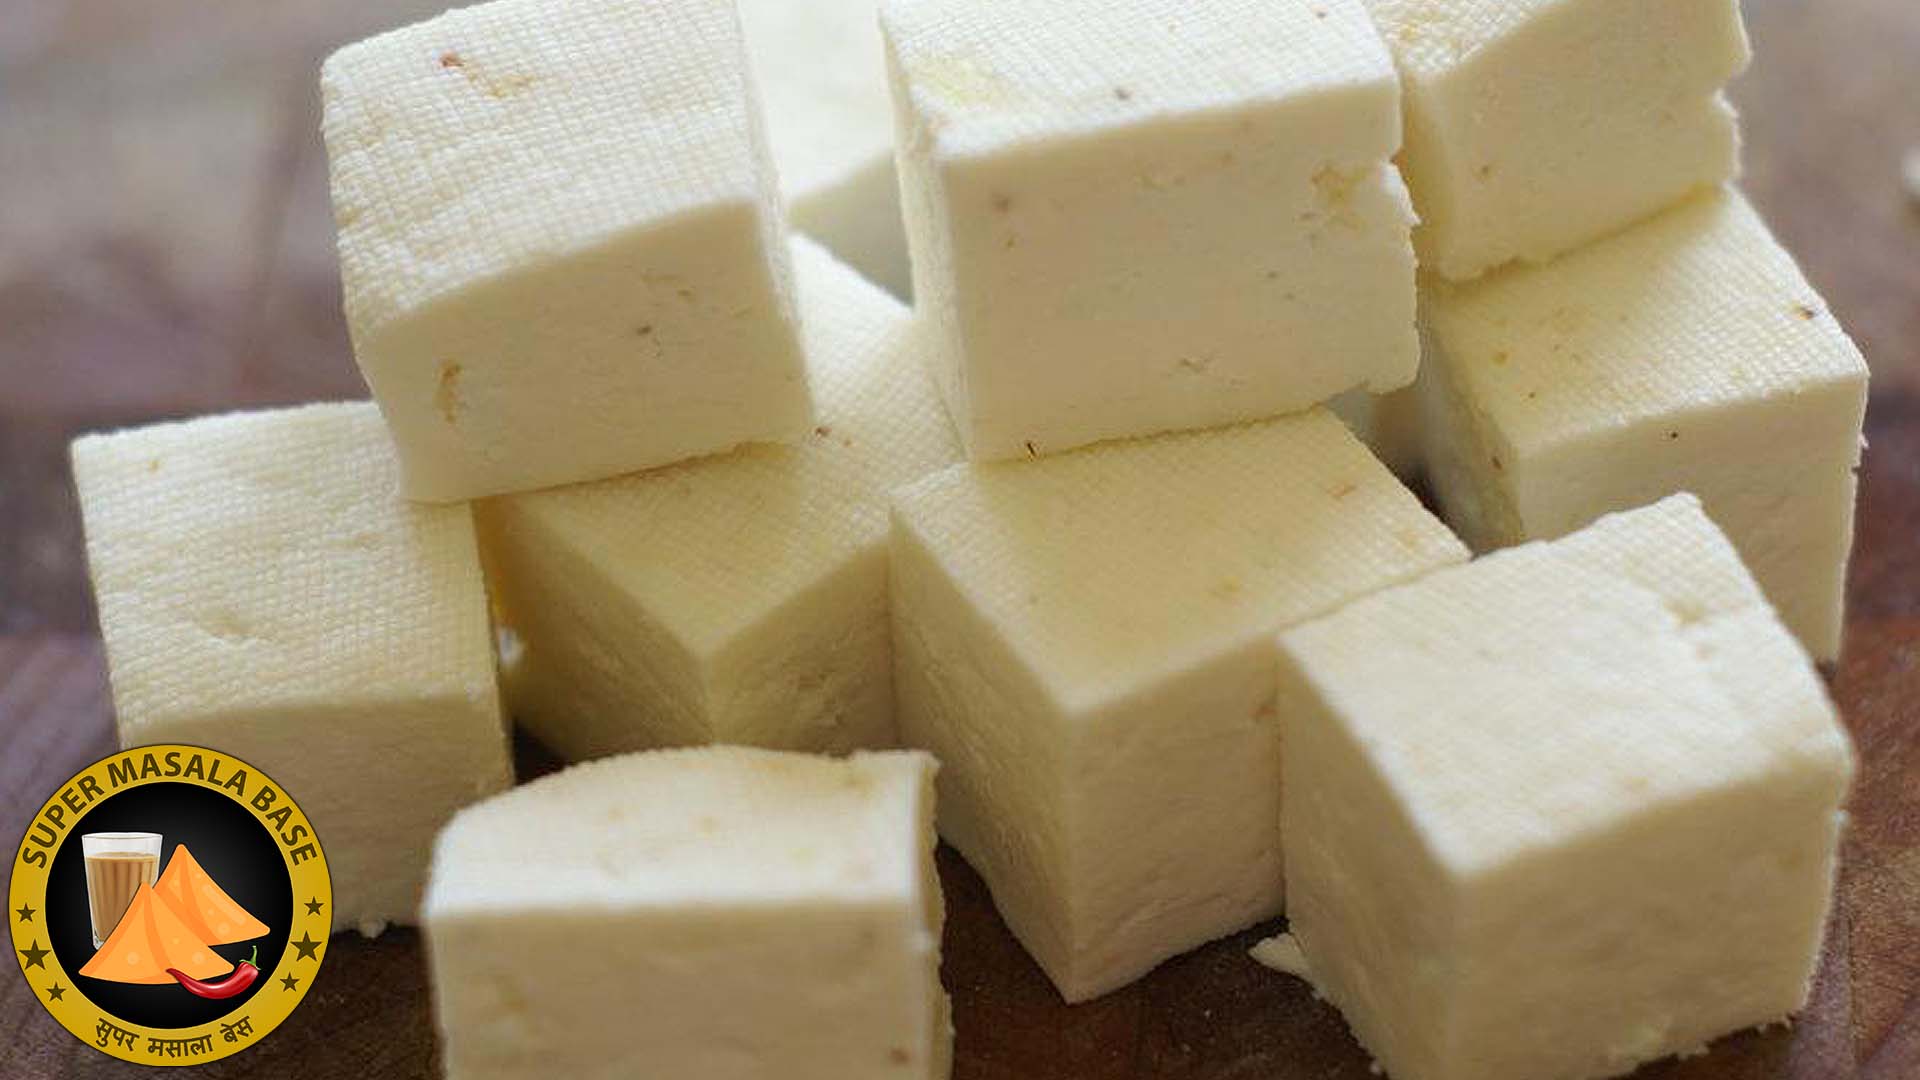 paneer tukde unfried cottage cheese blocks